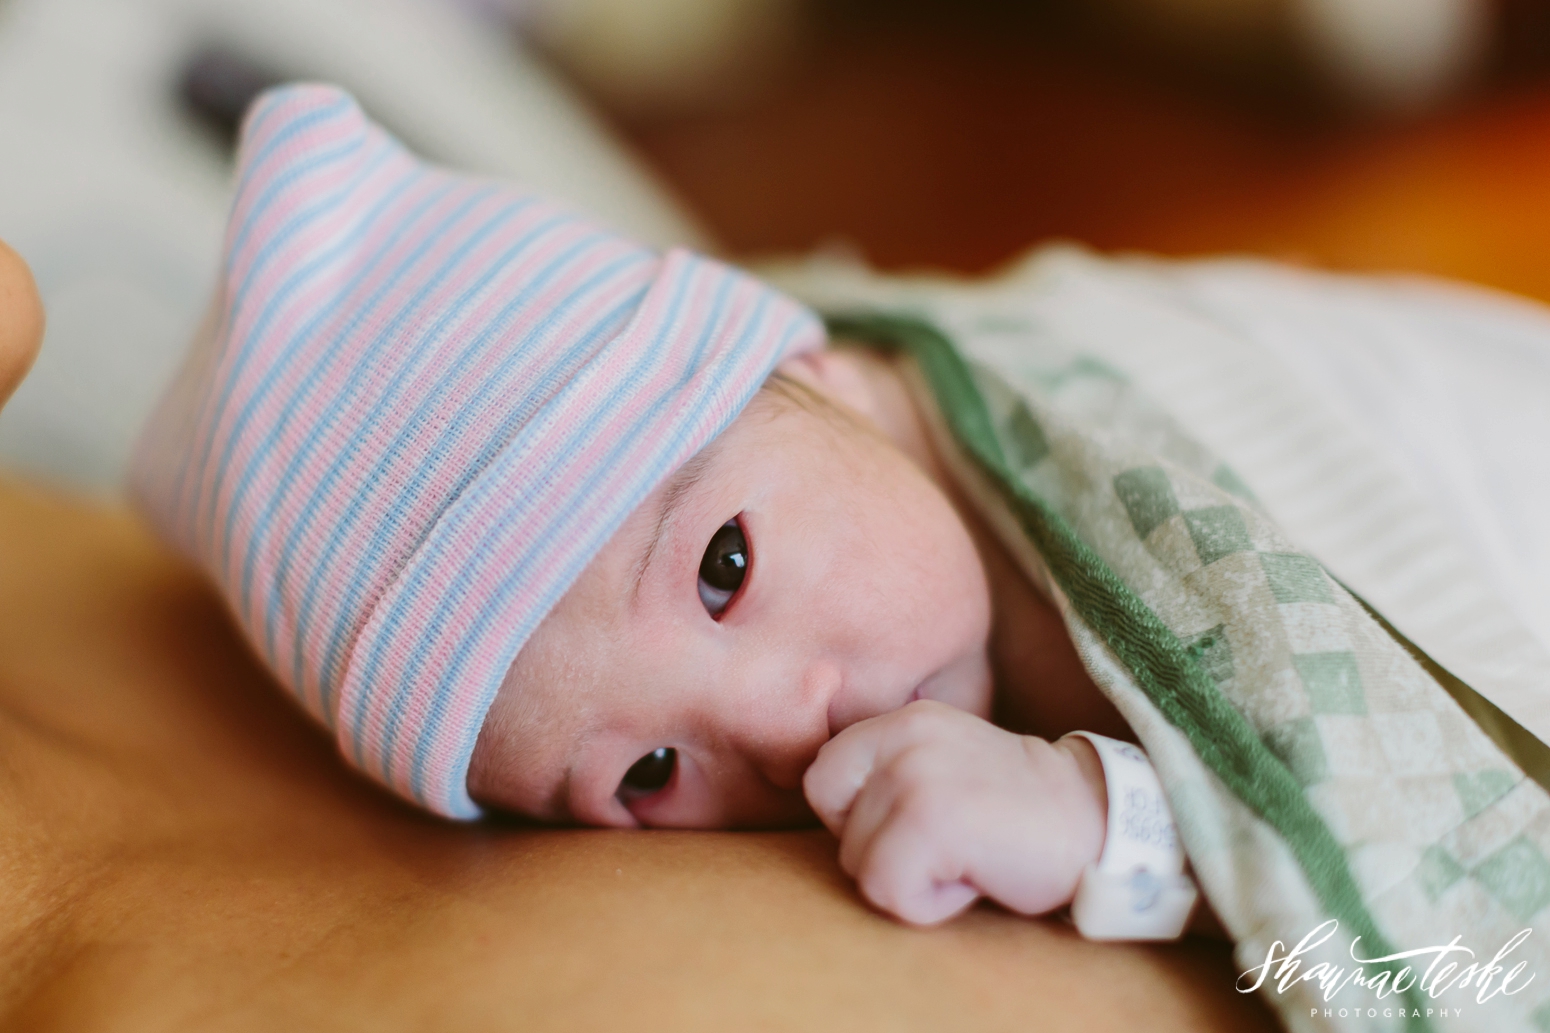 shaunae_teske_wisconsin_photographer_birth-story-stanley-walter-newborn-127